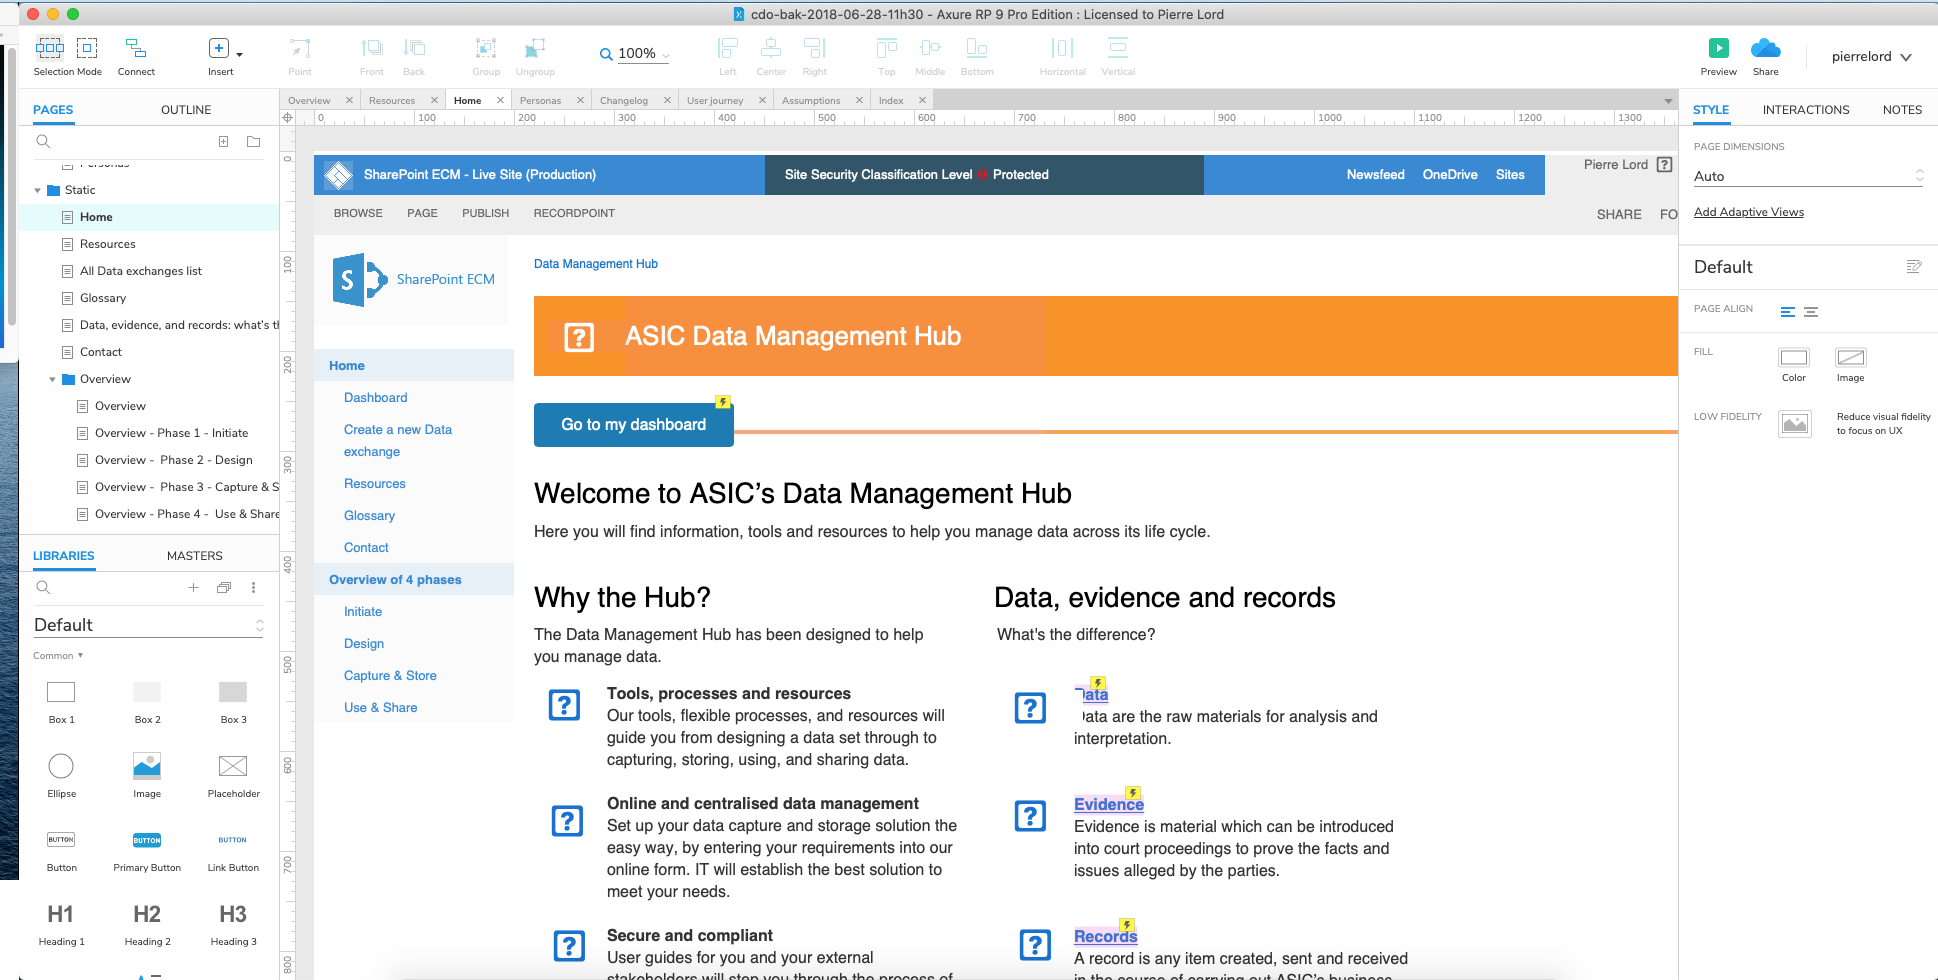 ASIC - Data Management Hub